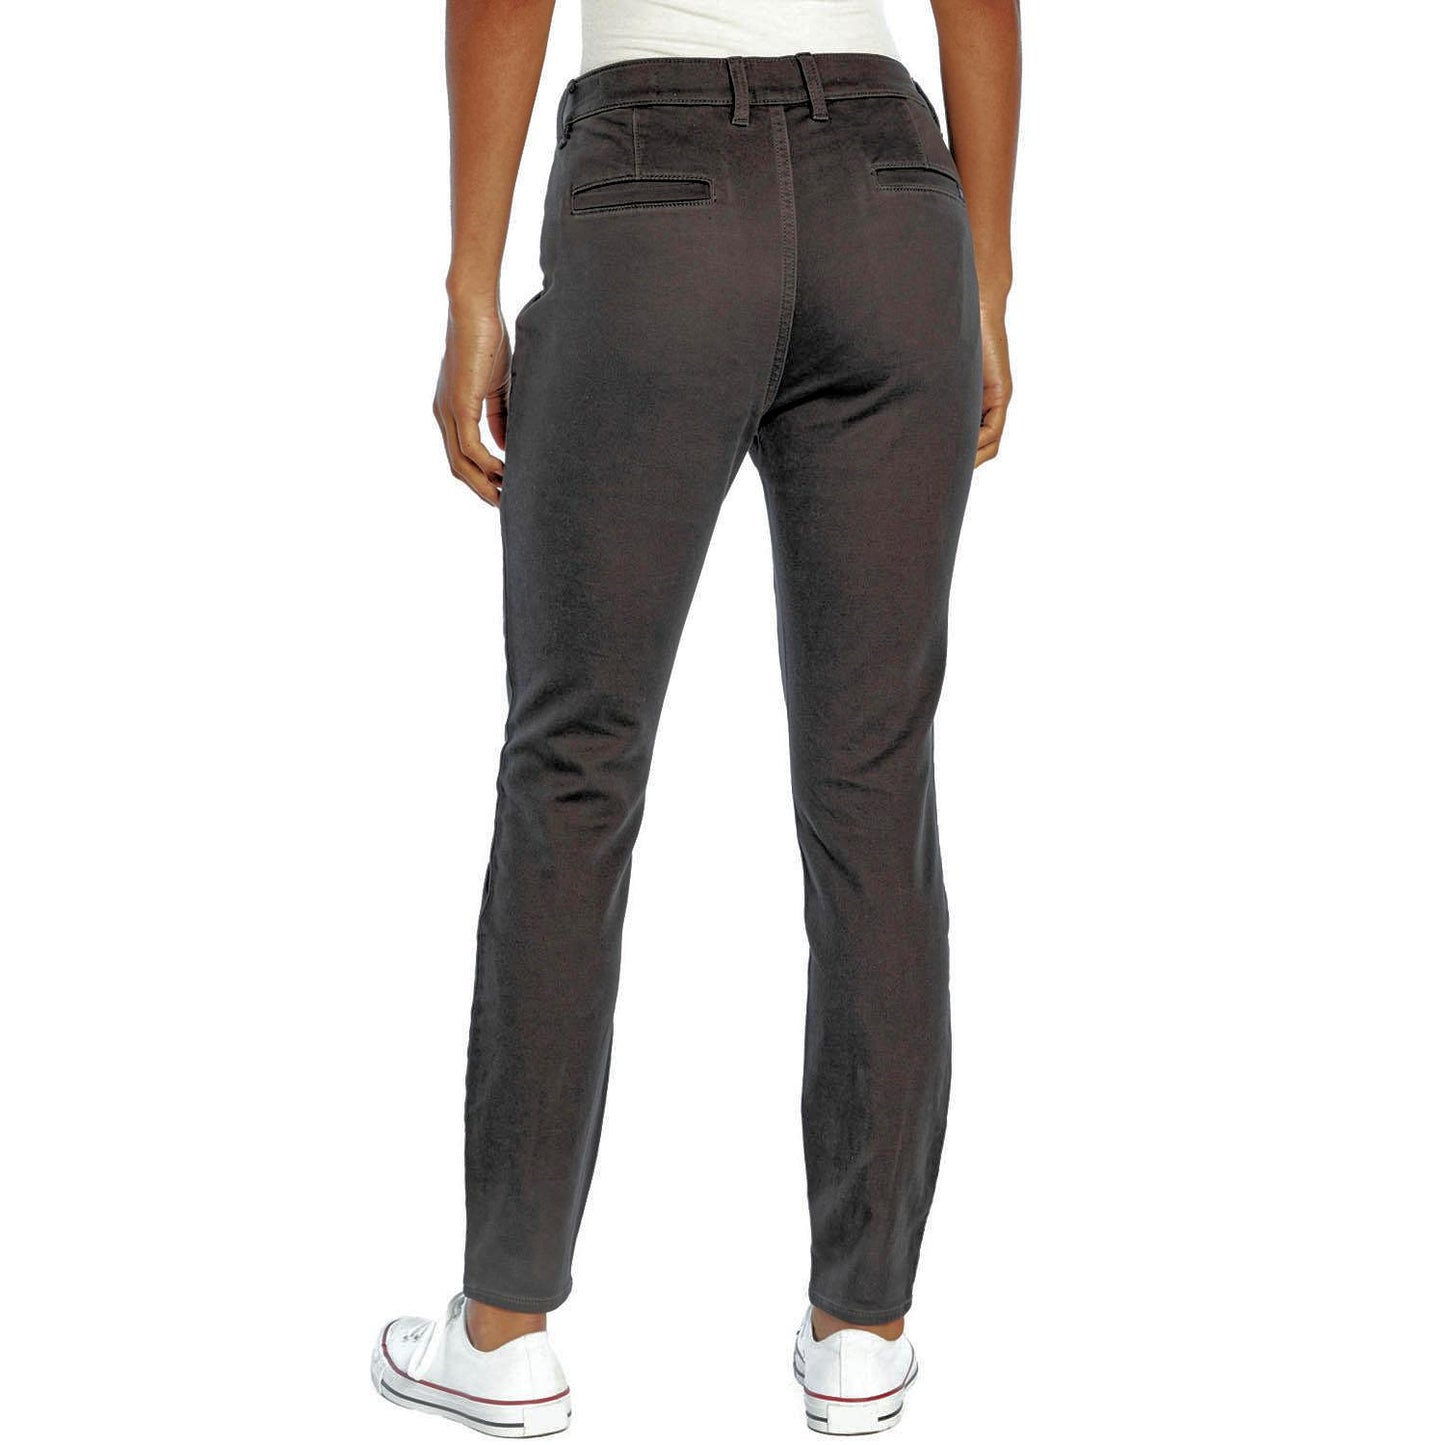 Gap Comfort Stretch Skinny Pants Choose Color Size